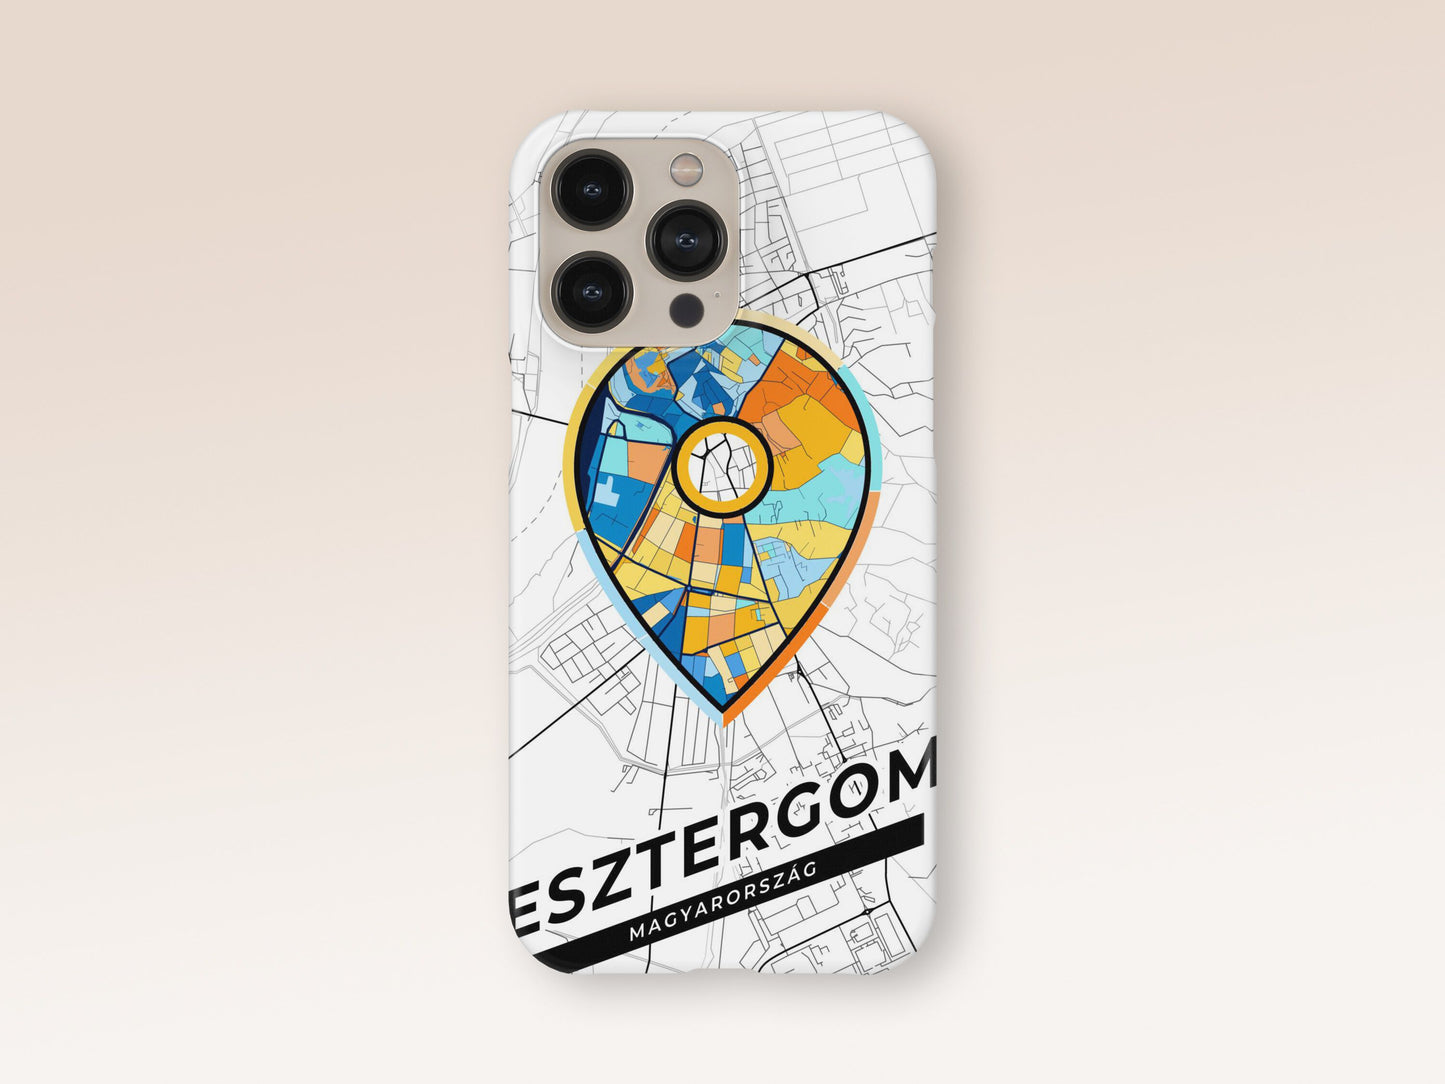 Esztergom Hungary slim phone case with colorful icon. Birthday, wedding or housewarming gift. Couple match cases. 1